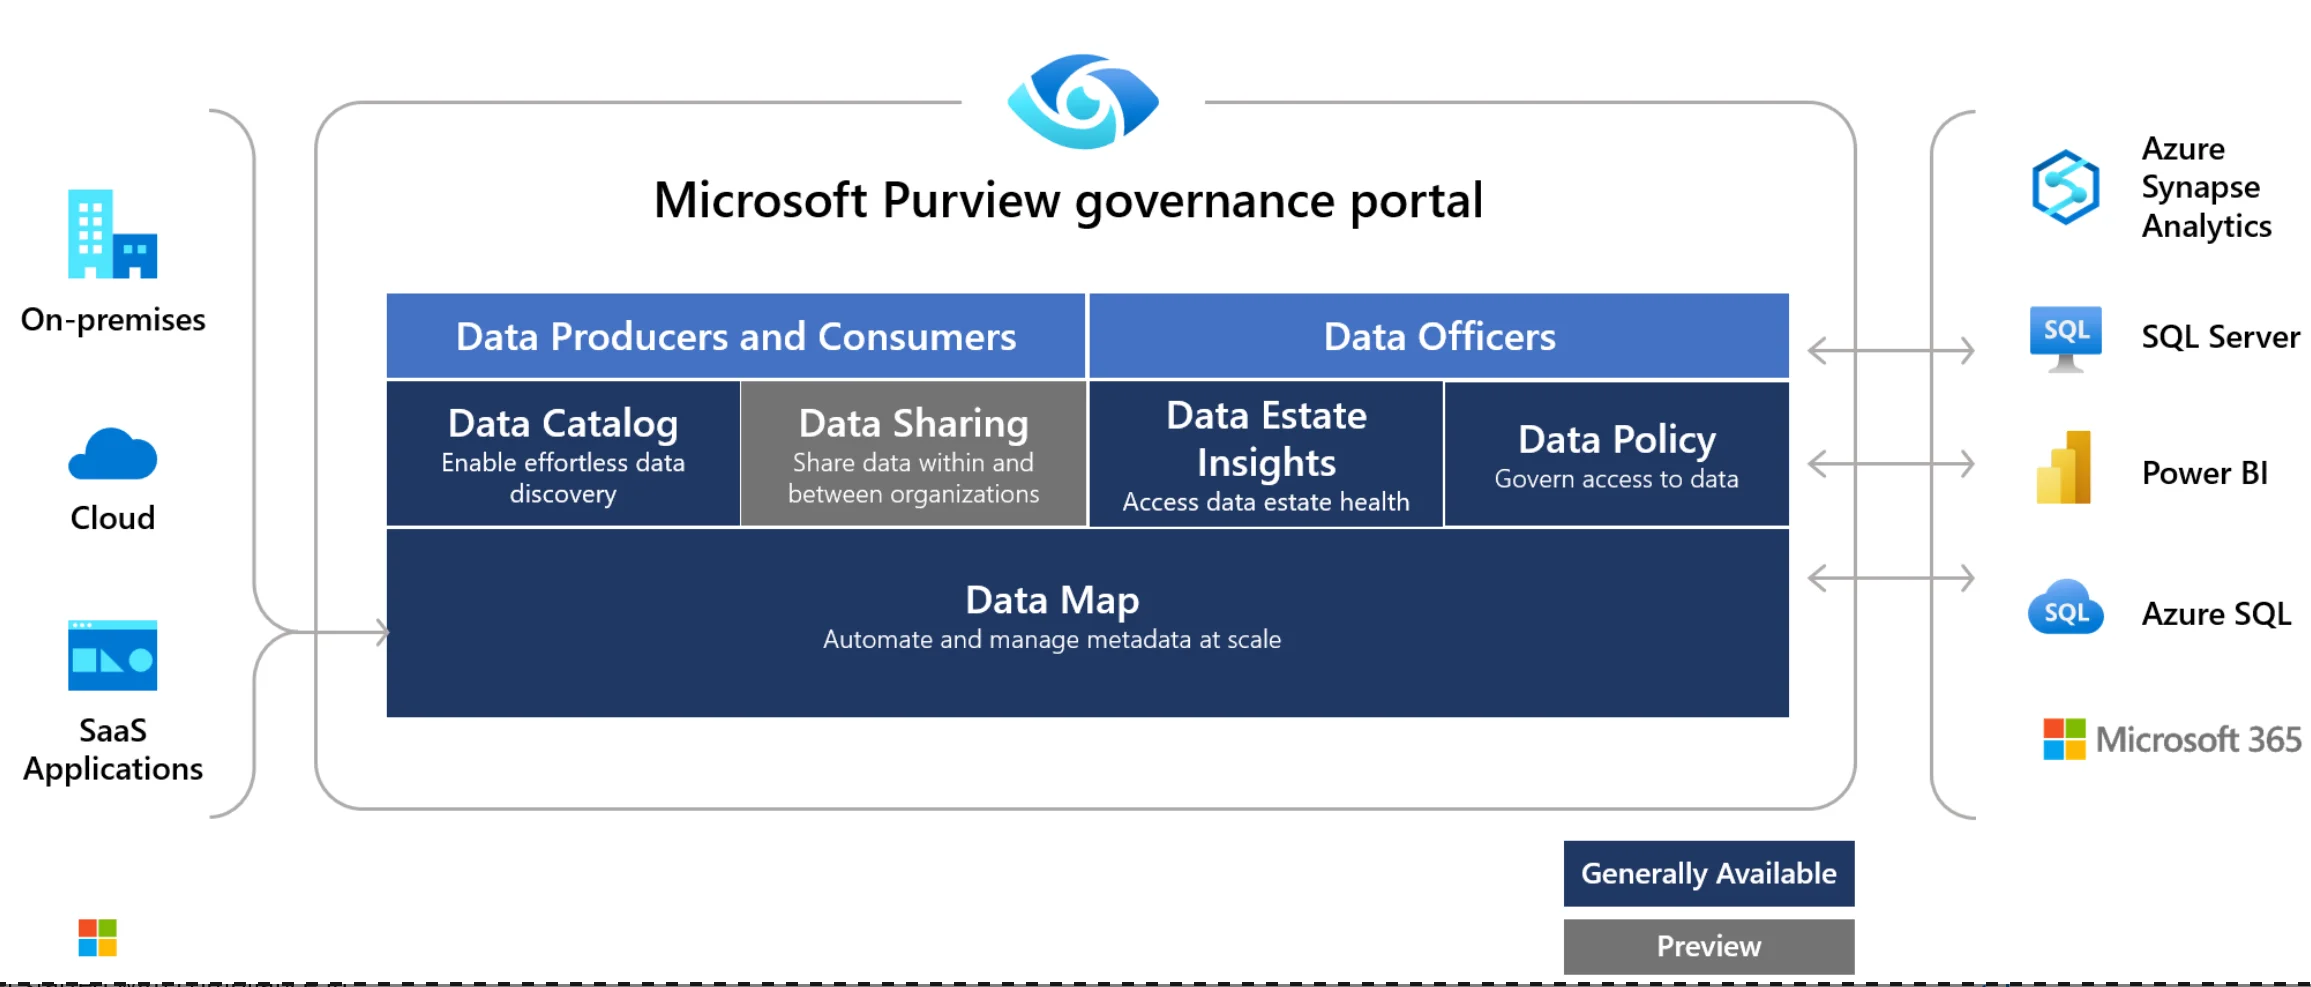 Microsoft Purview governance portal